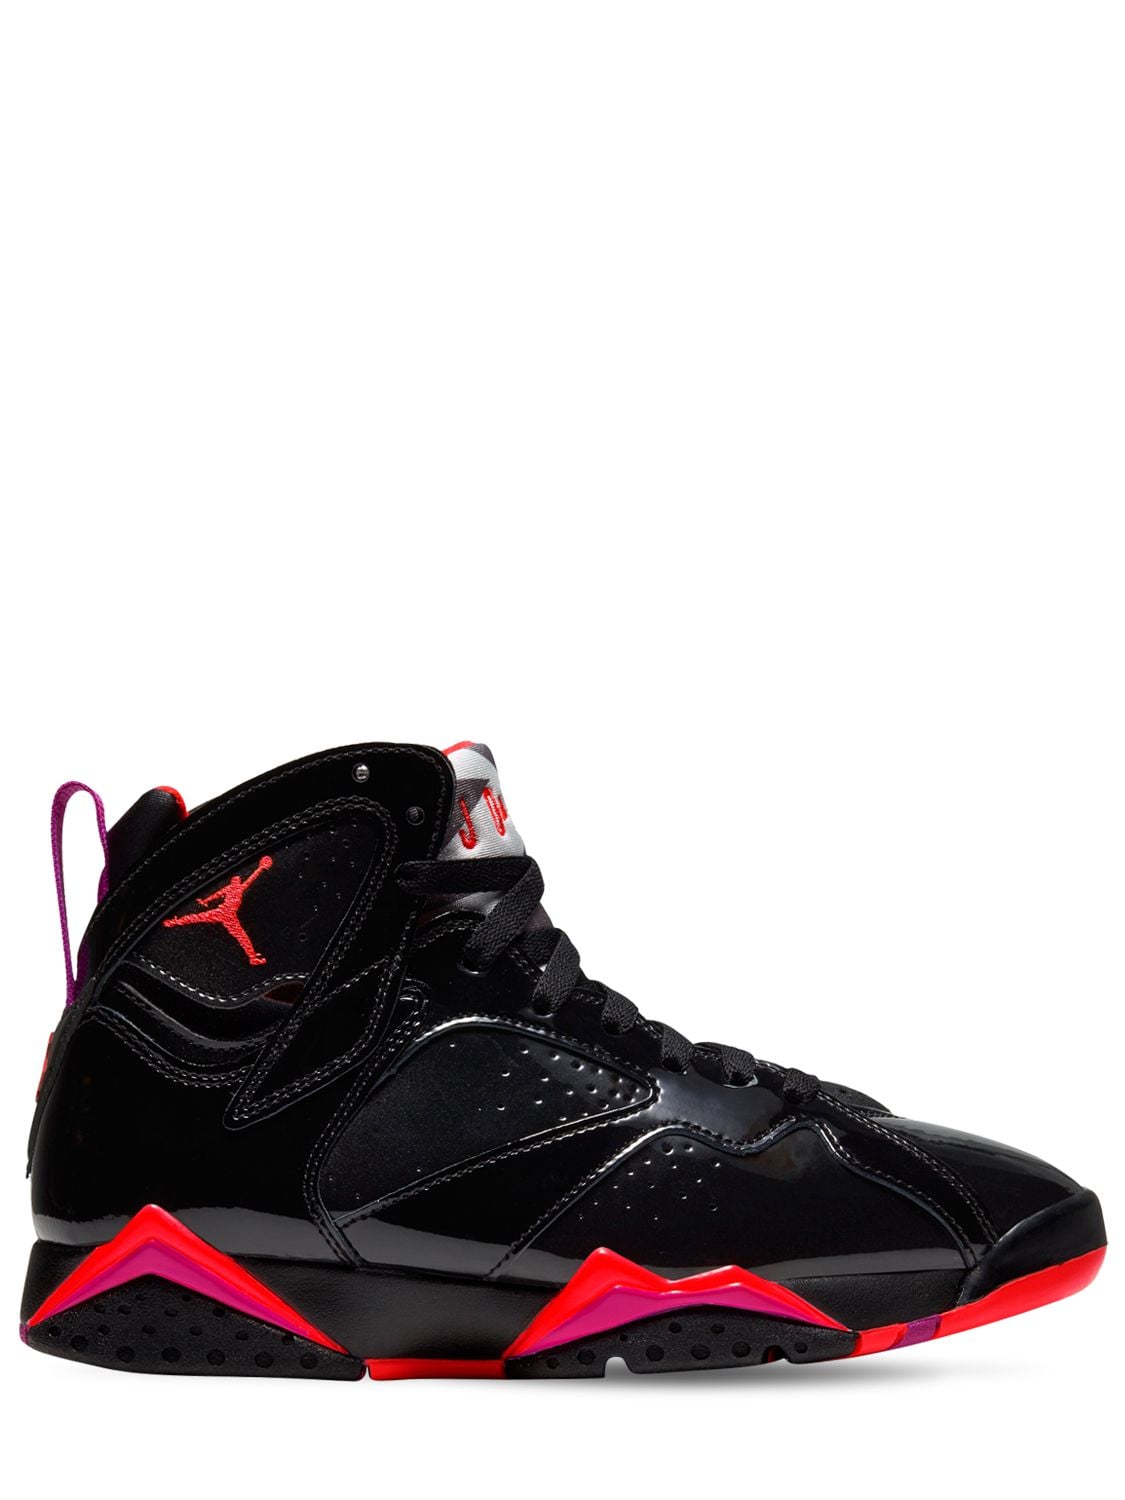 Air Jordan Retro 7 Basketball Shoes 